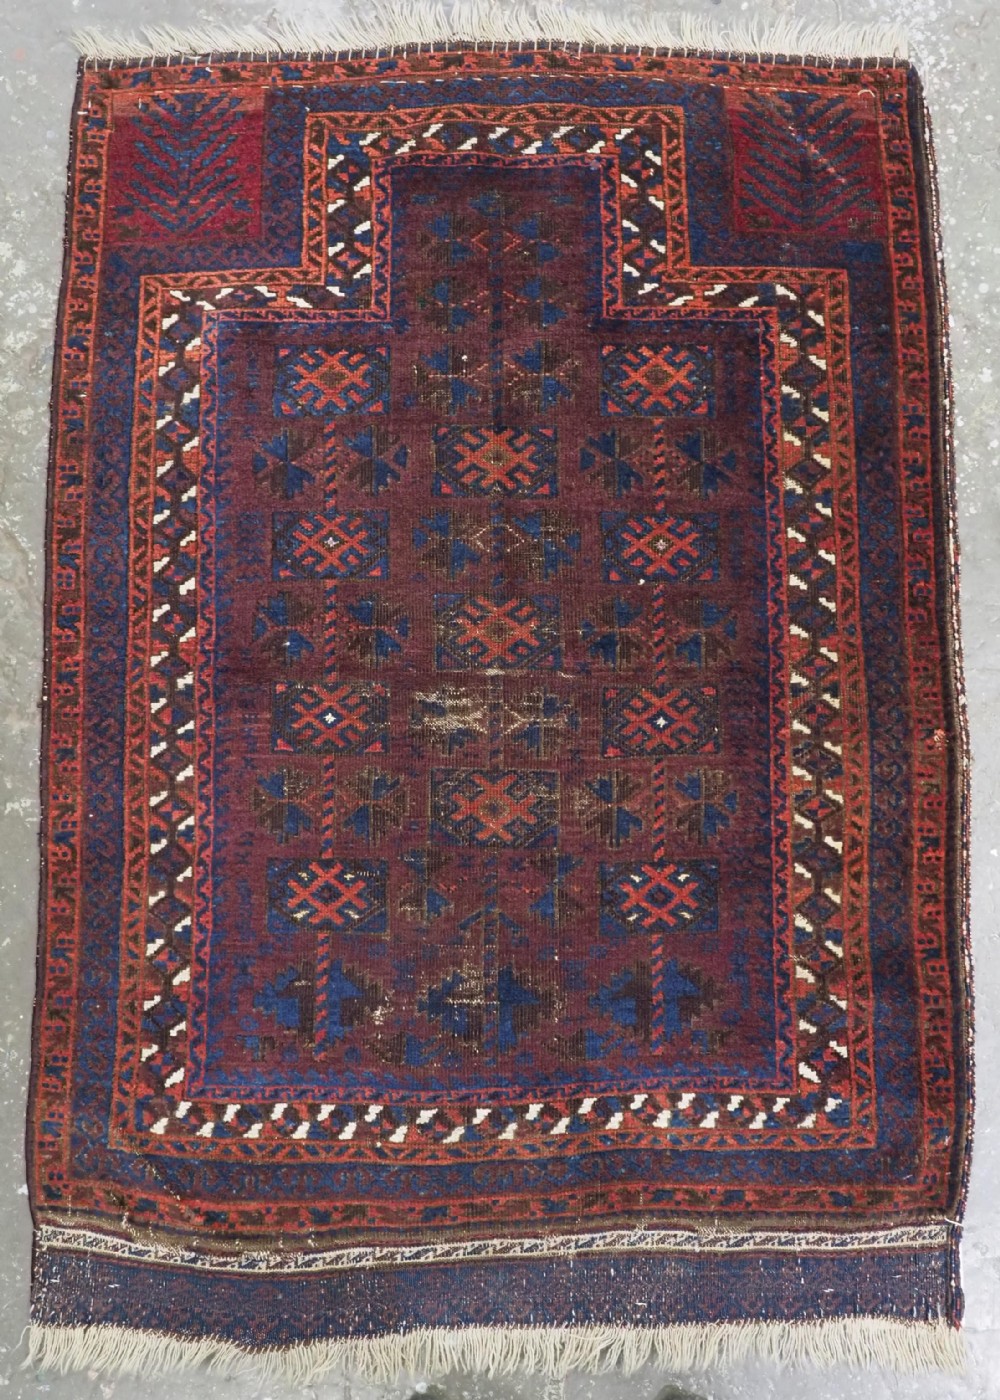 antique baluch prayer rug timuri yaqoub khani with scarce box design on an aubergine ground circa 1880